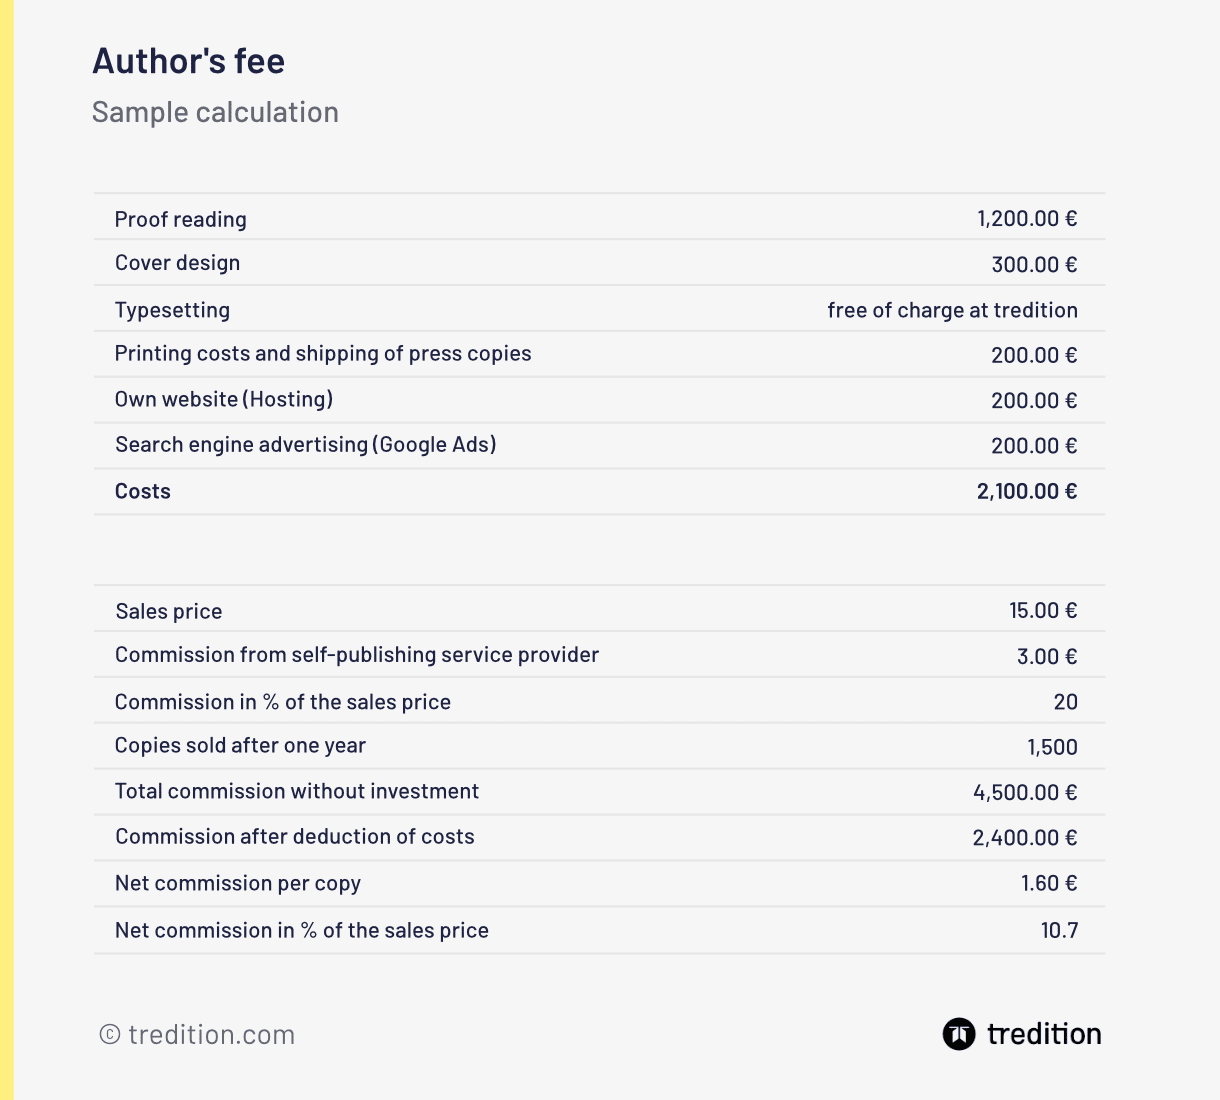 Author's fee sample calculation